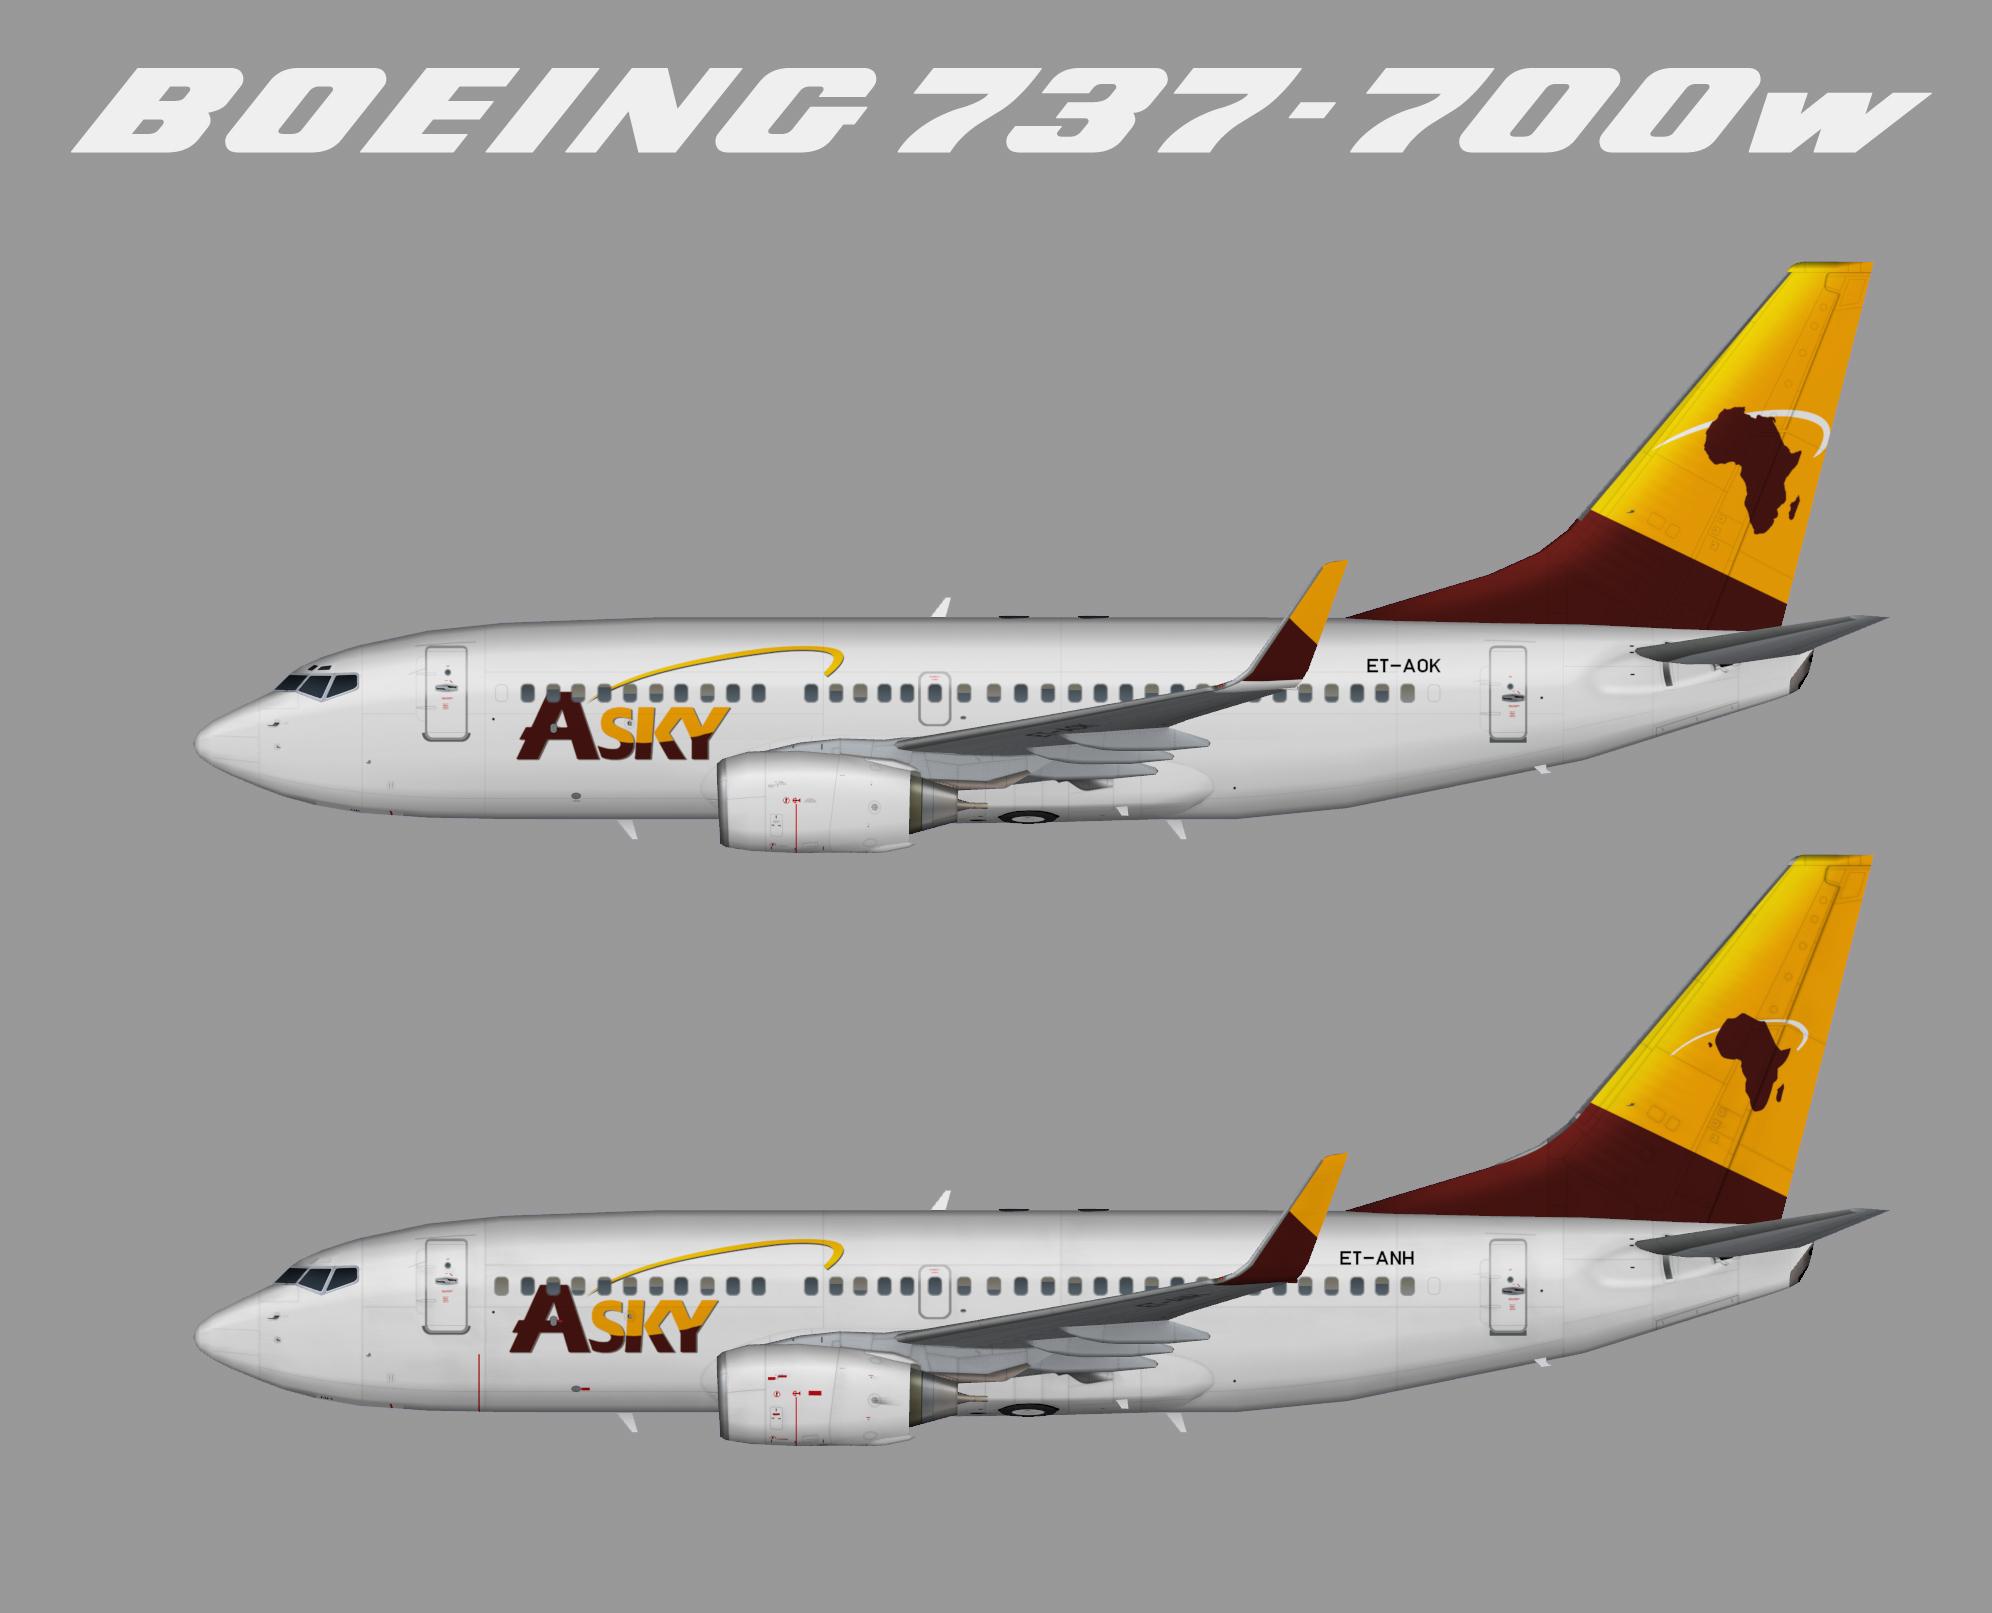 ASky Boeing 737-700w